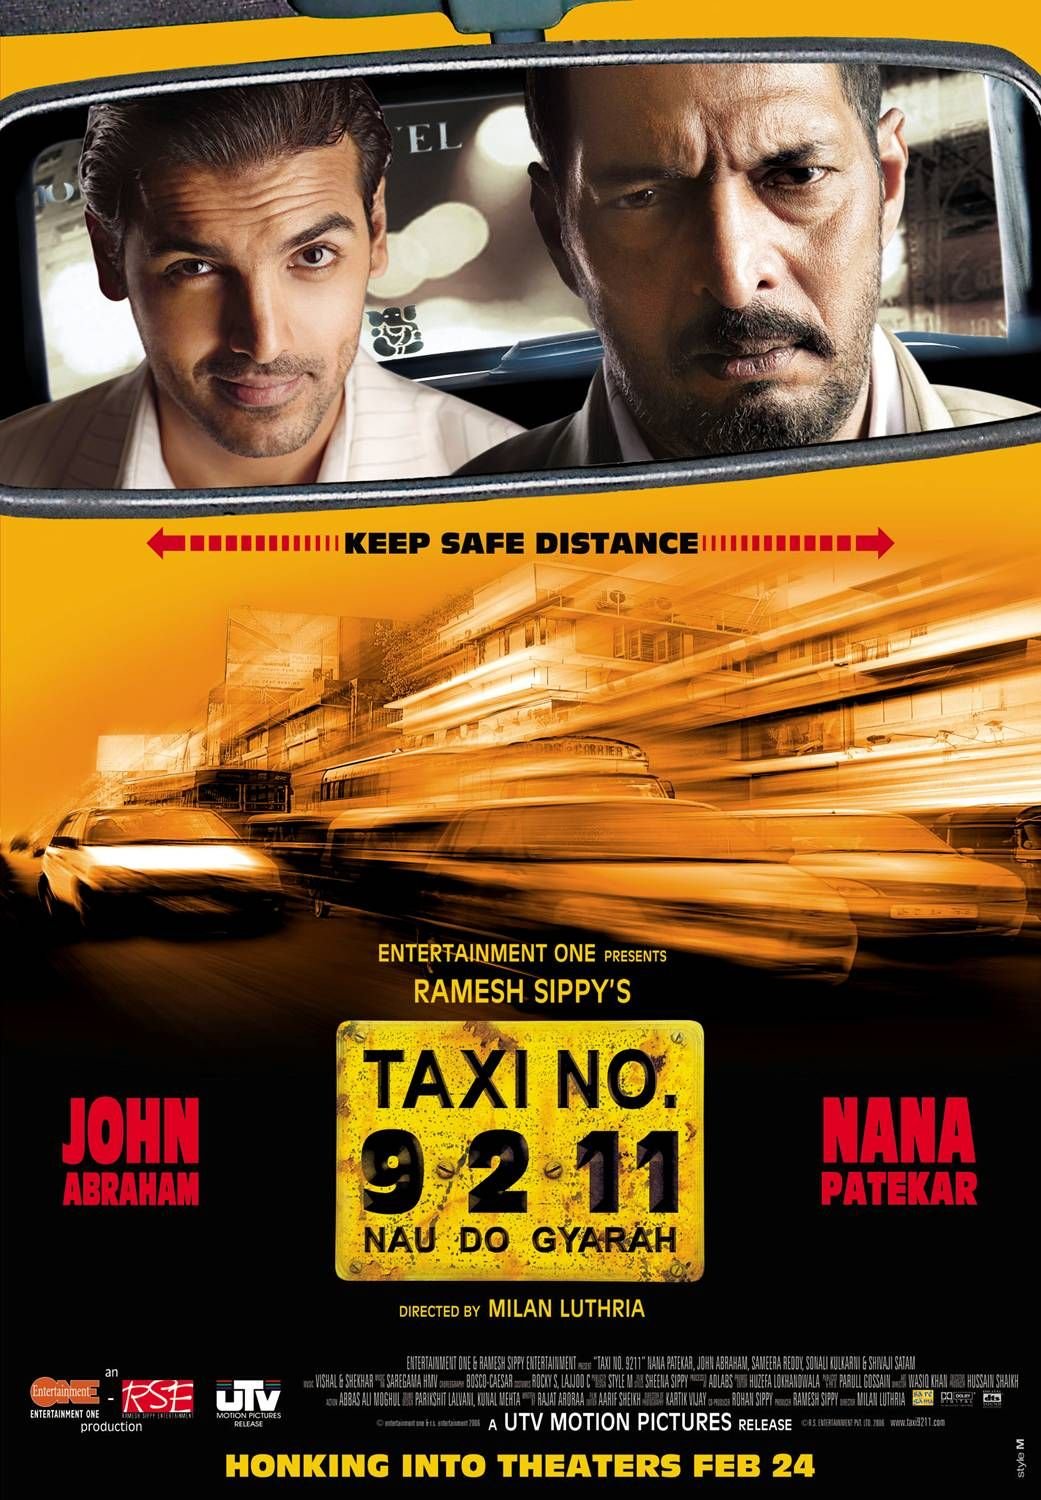 Такси люка бессона. Taxi no. 9 2 11: nau do Gyarah, 2006. Сами Насери такси 6.